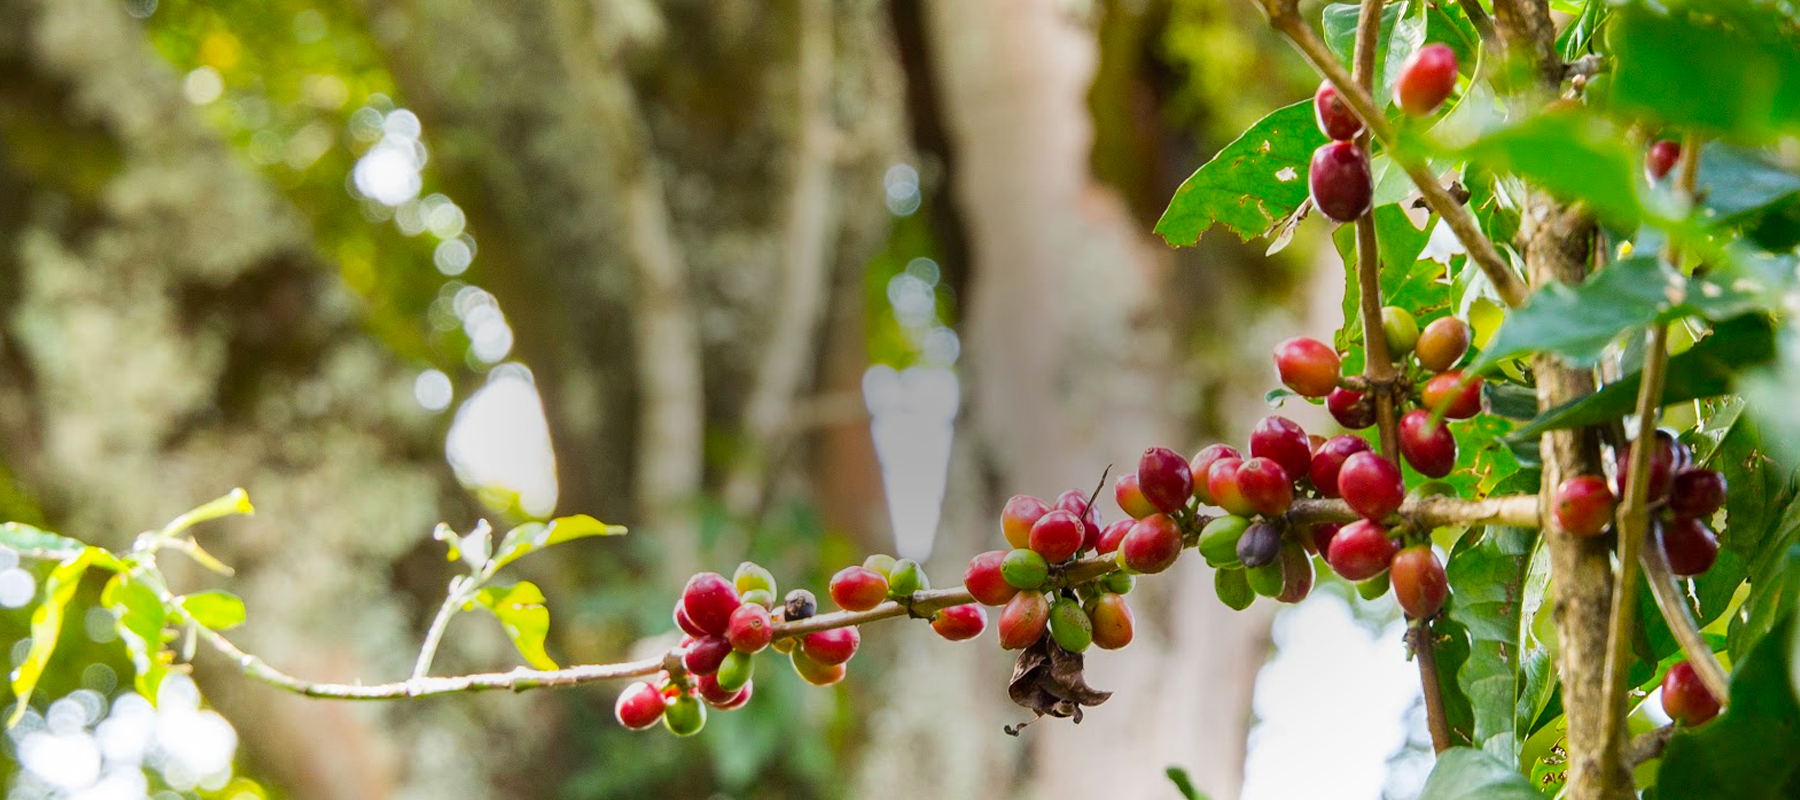 Coffee cherries on tree